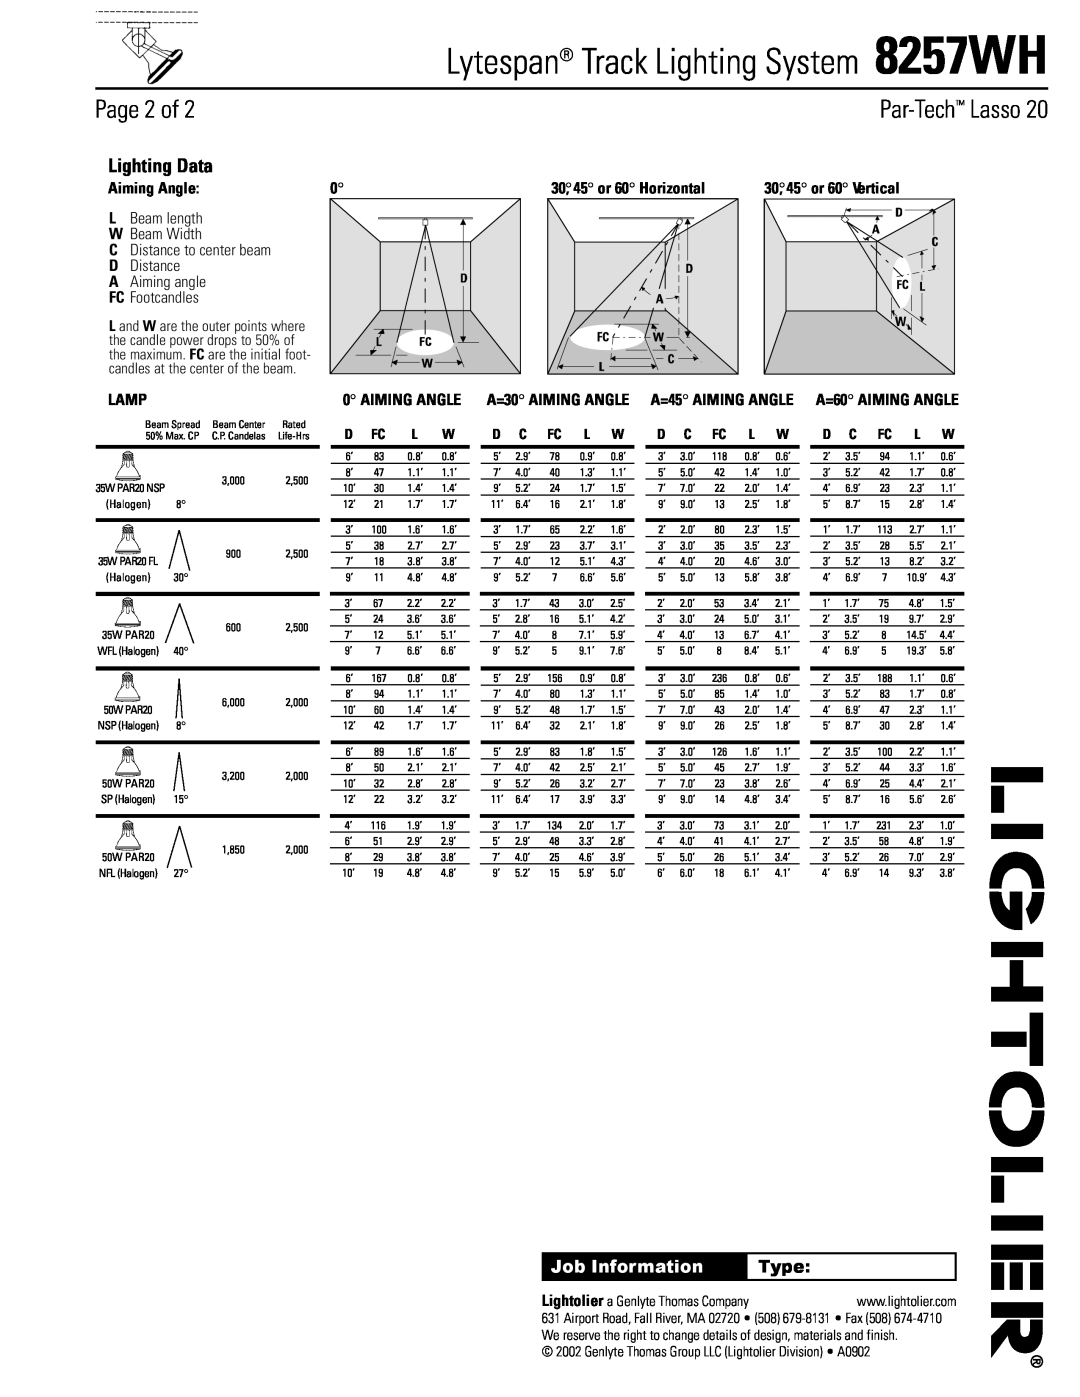 Lightolier Lytespan Track Lighting System 8257WH, Page 2 of, Par-Tech Lasso, Lighting Data, Job Information, Type 